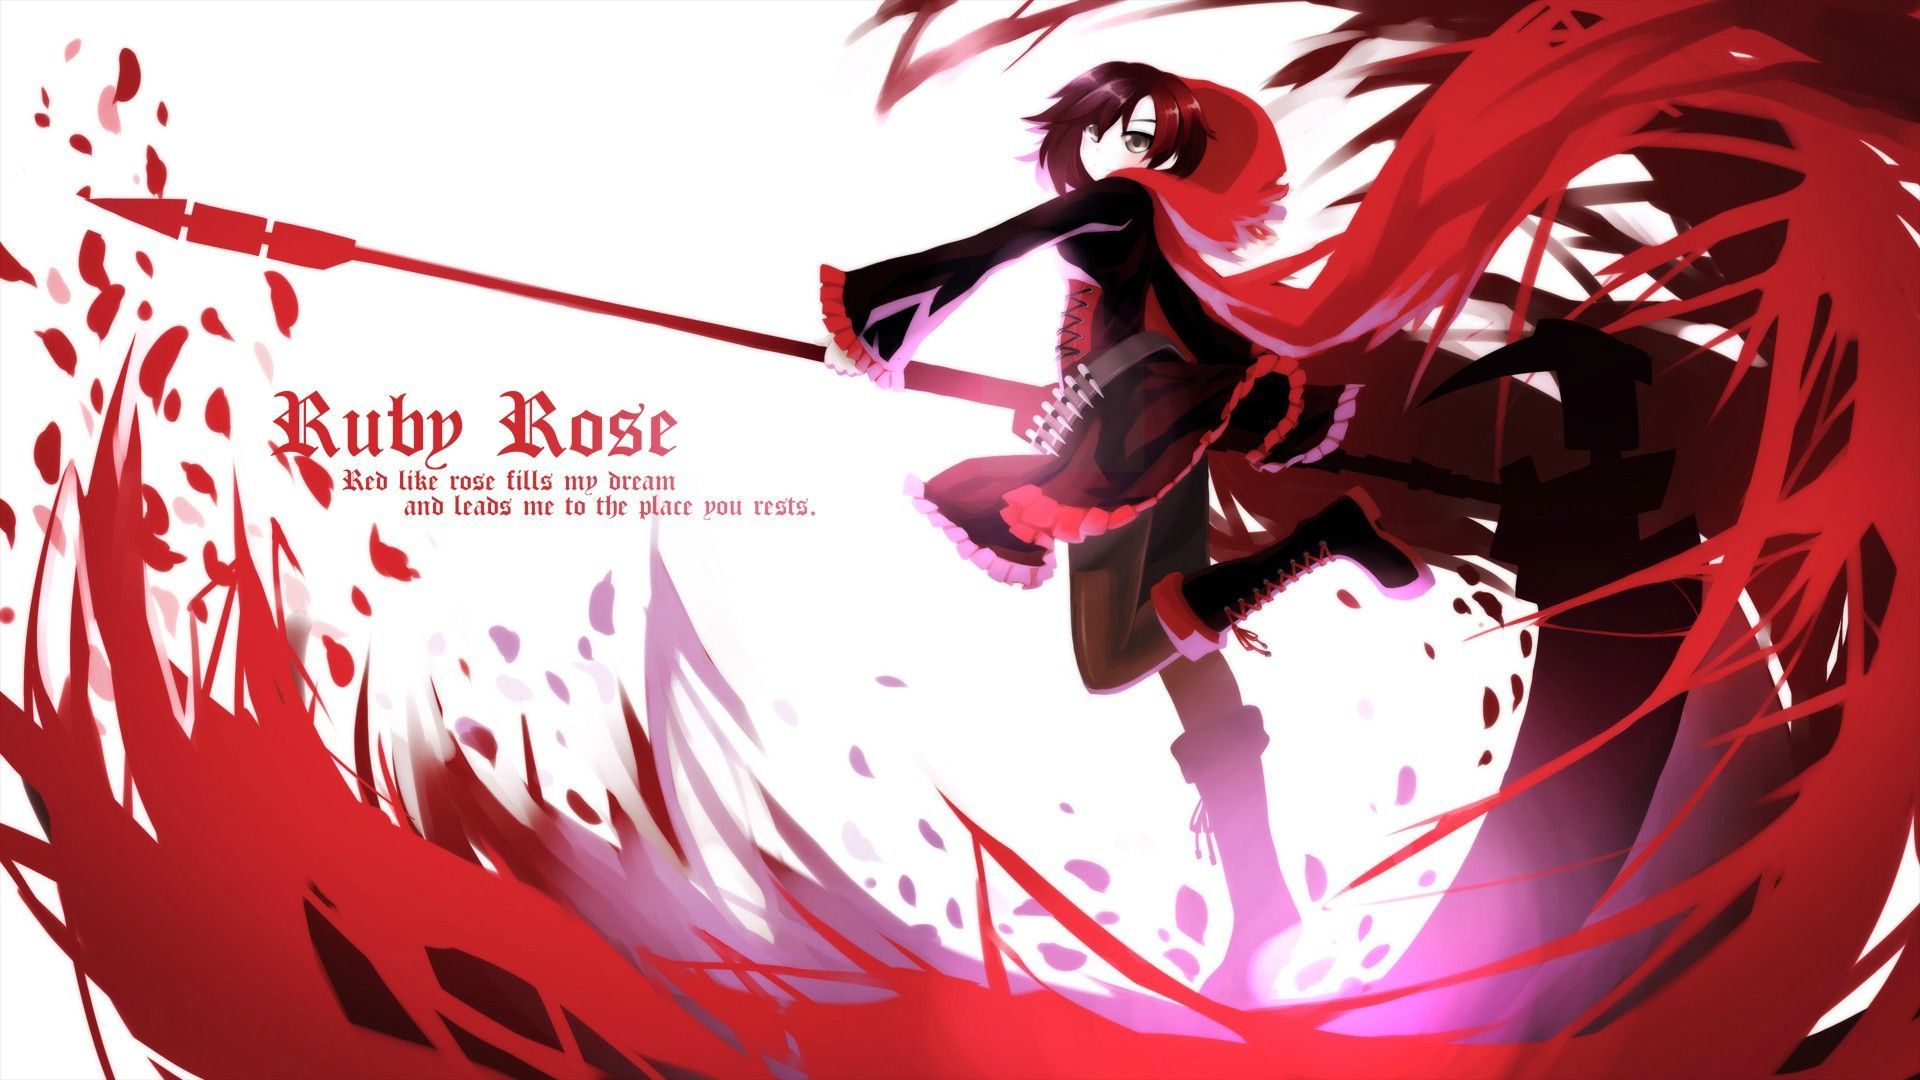 RWBY Wallpaper. Rwby, Ruby rose anime, Rwby wallpaper